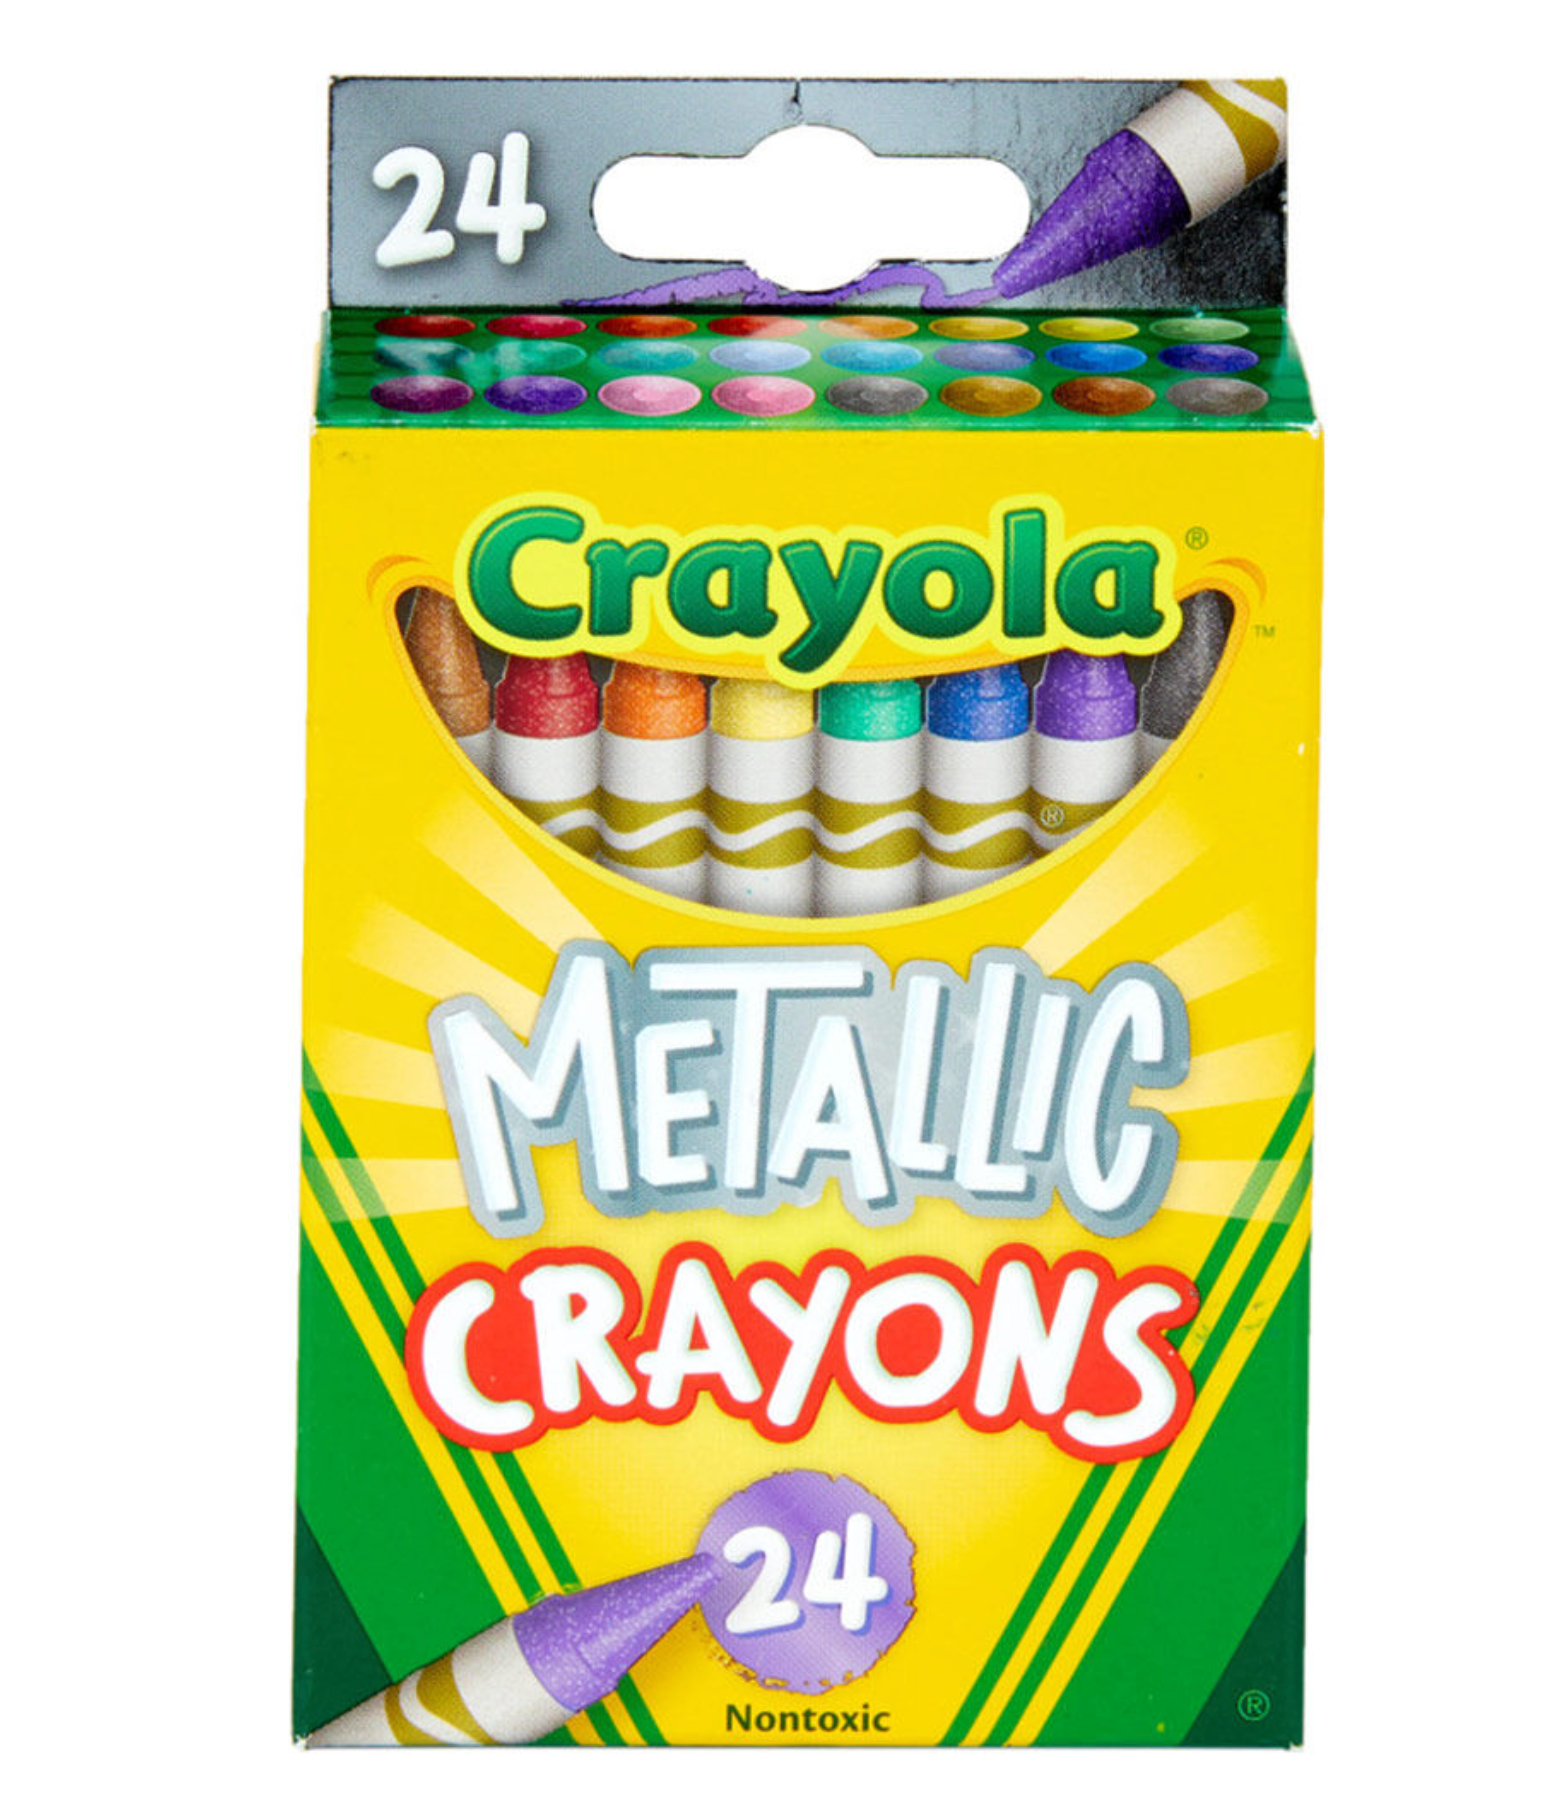 Crayola Metallic Crayons, 24 Count